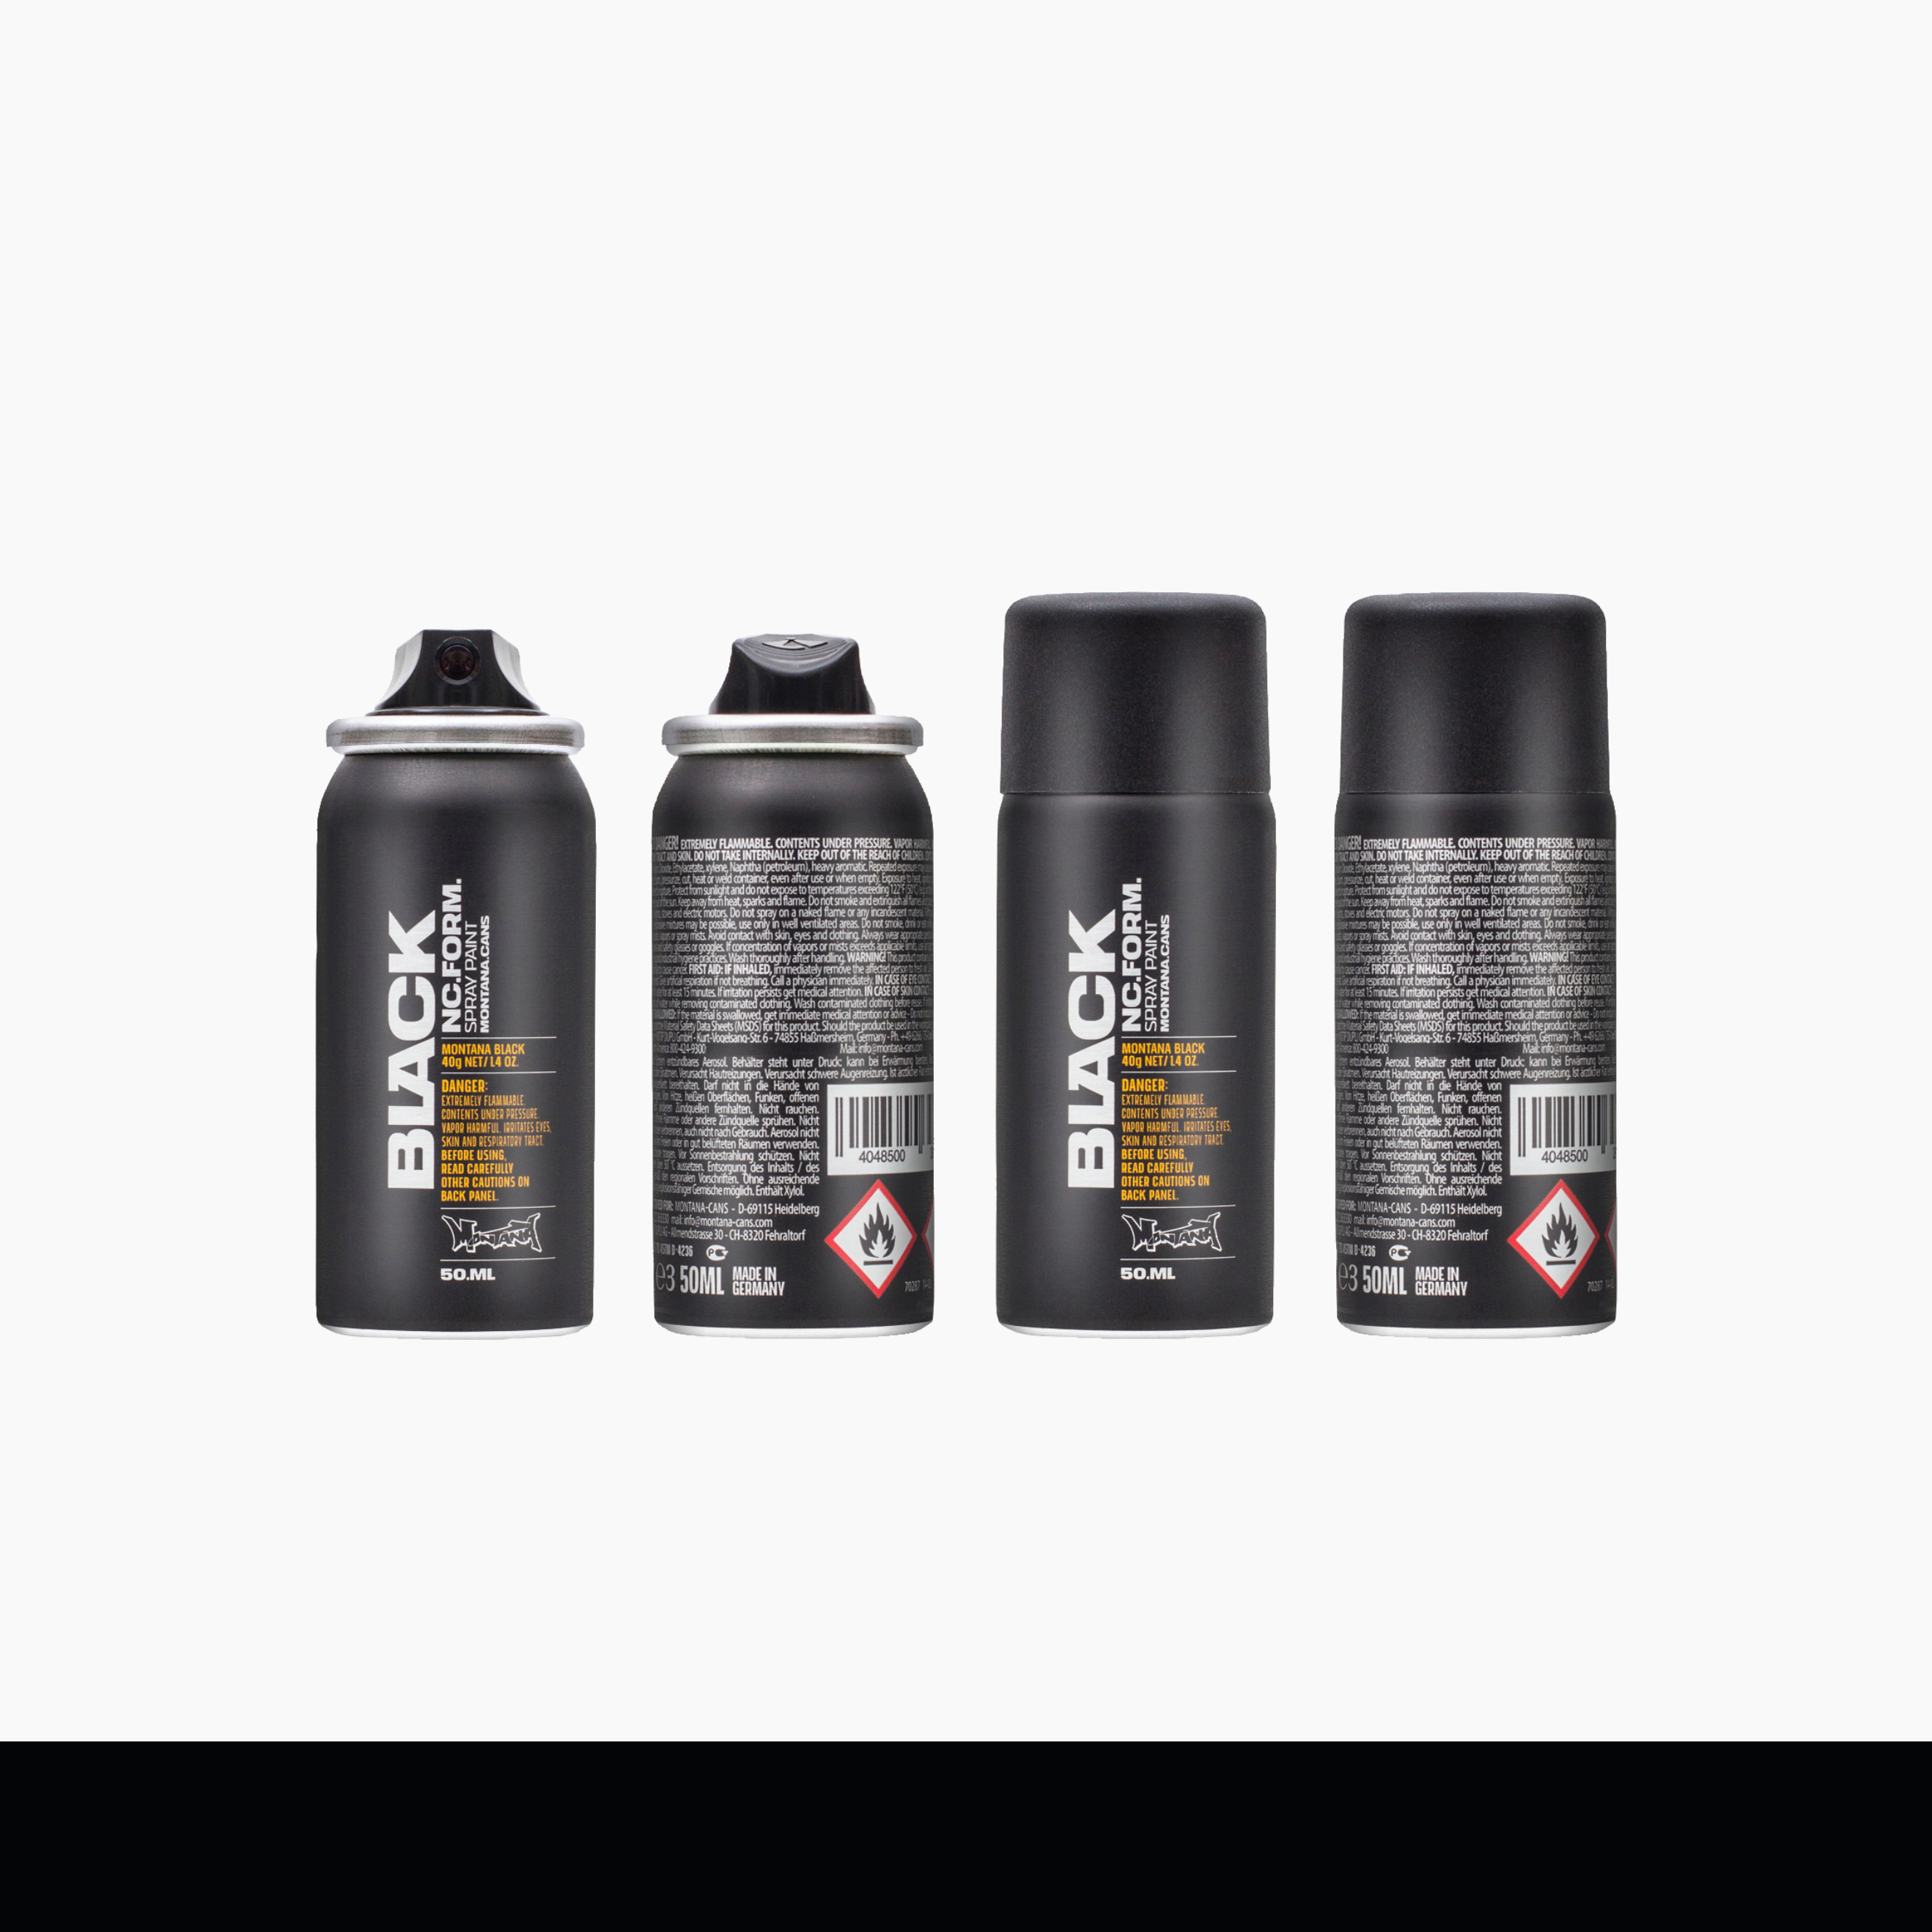 Montana Cans - Montana BLACK High-Pressure Cans Spray Color